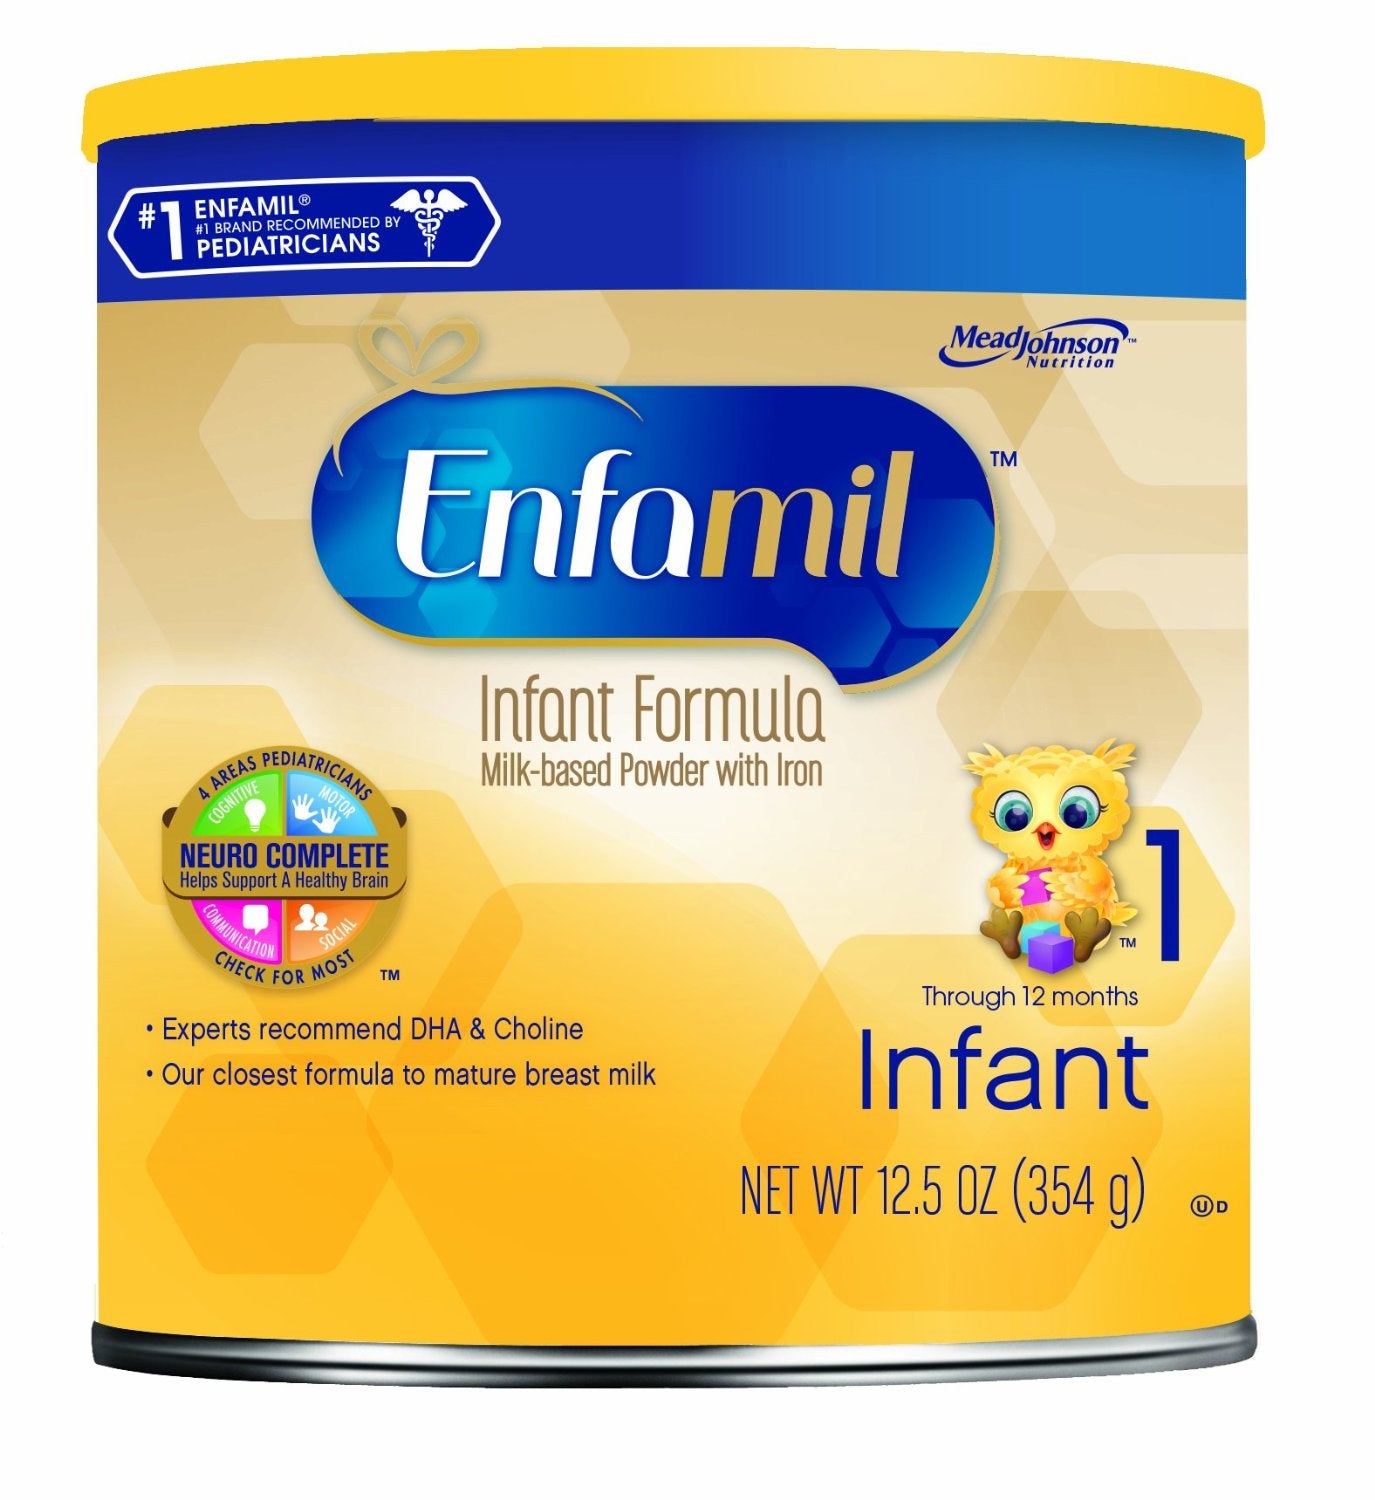 enfamil-infant-12-5oz-can-saveonformula